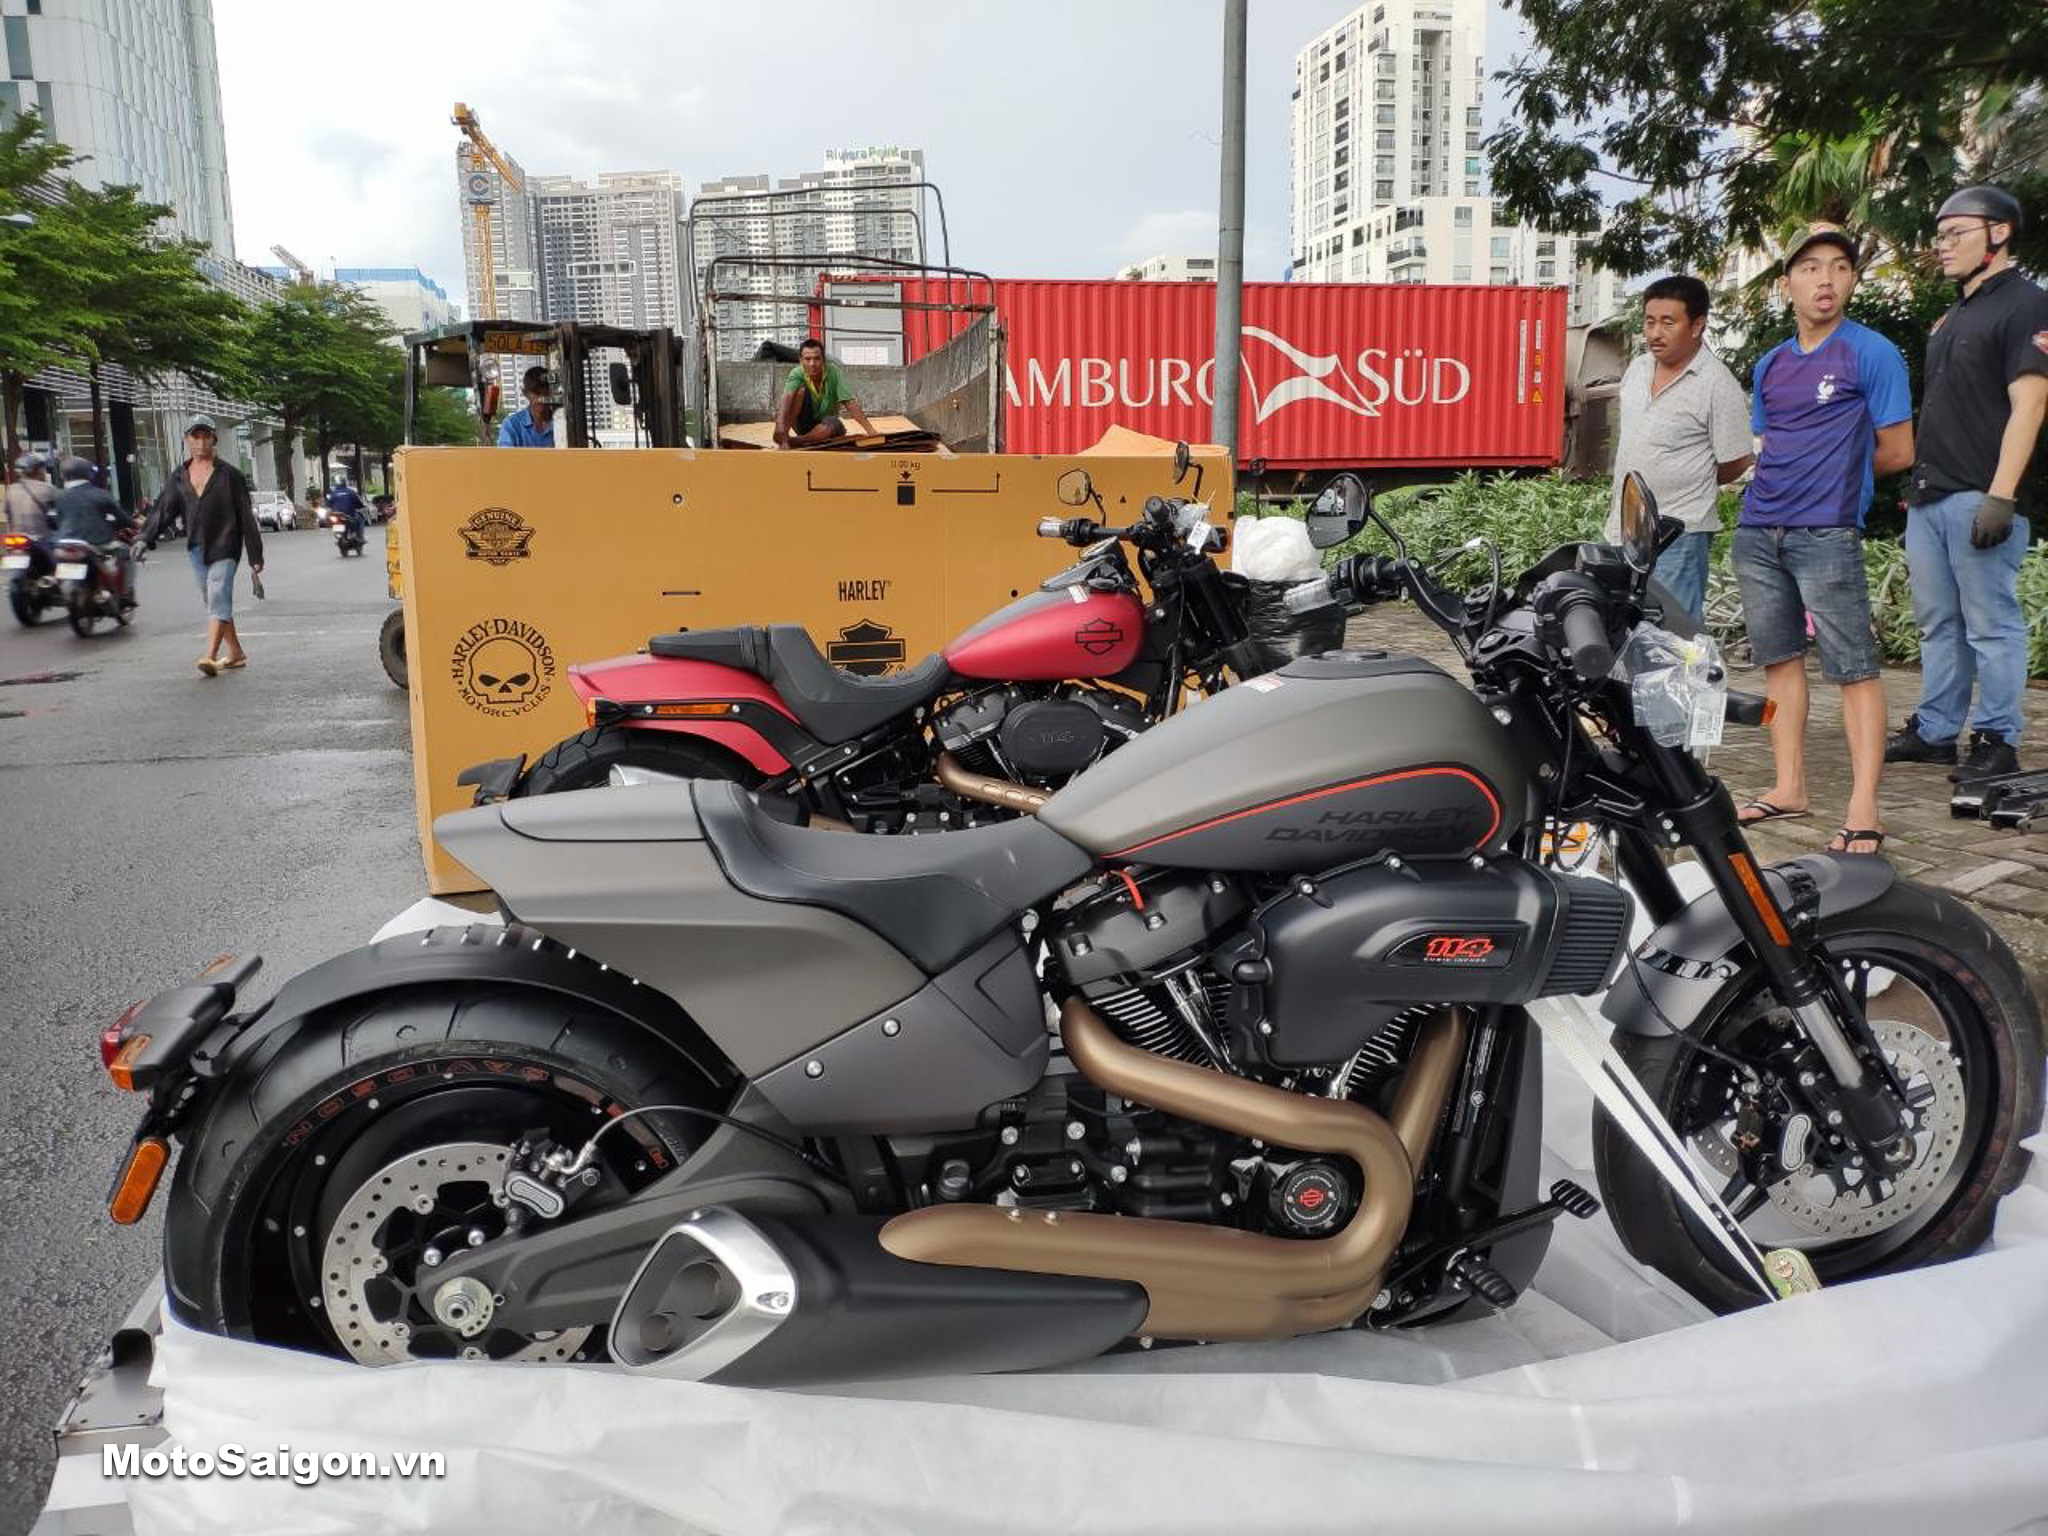 Chi Tiết Mẫu Xe Tốc độ Harley Davidson Fxdr 114 2020 Motosaigon